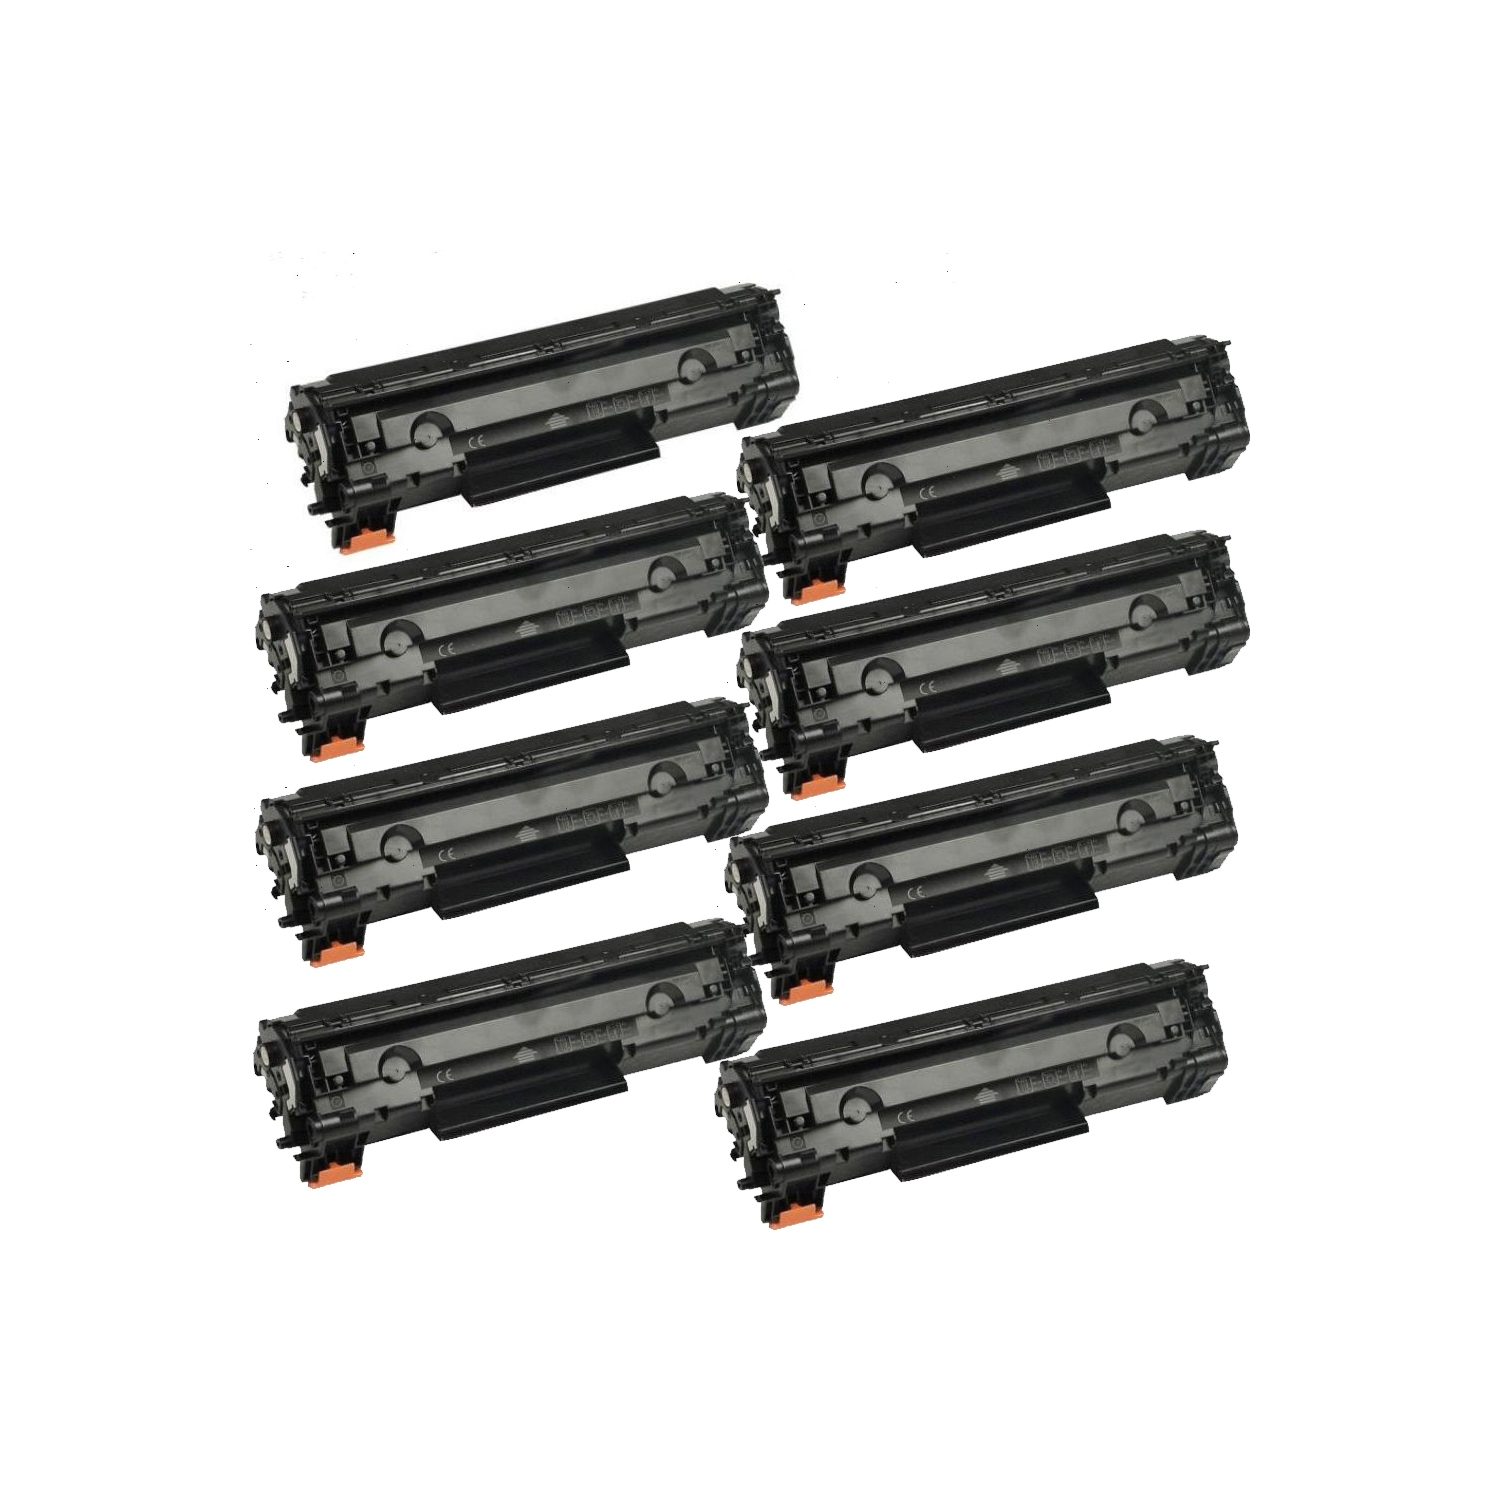 8 PK CRG128 Compatible Toner Cartridge for Canon 128 L100,D550,MF4412,MF4420n,MF4450,MF4550,MF4570dn,MF4580dn ,MF4770n ,MF4880dw,MF4890dw